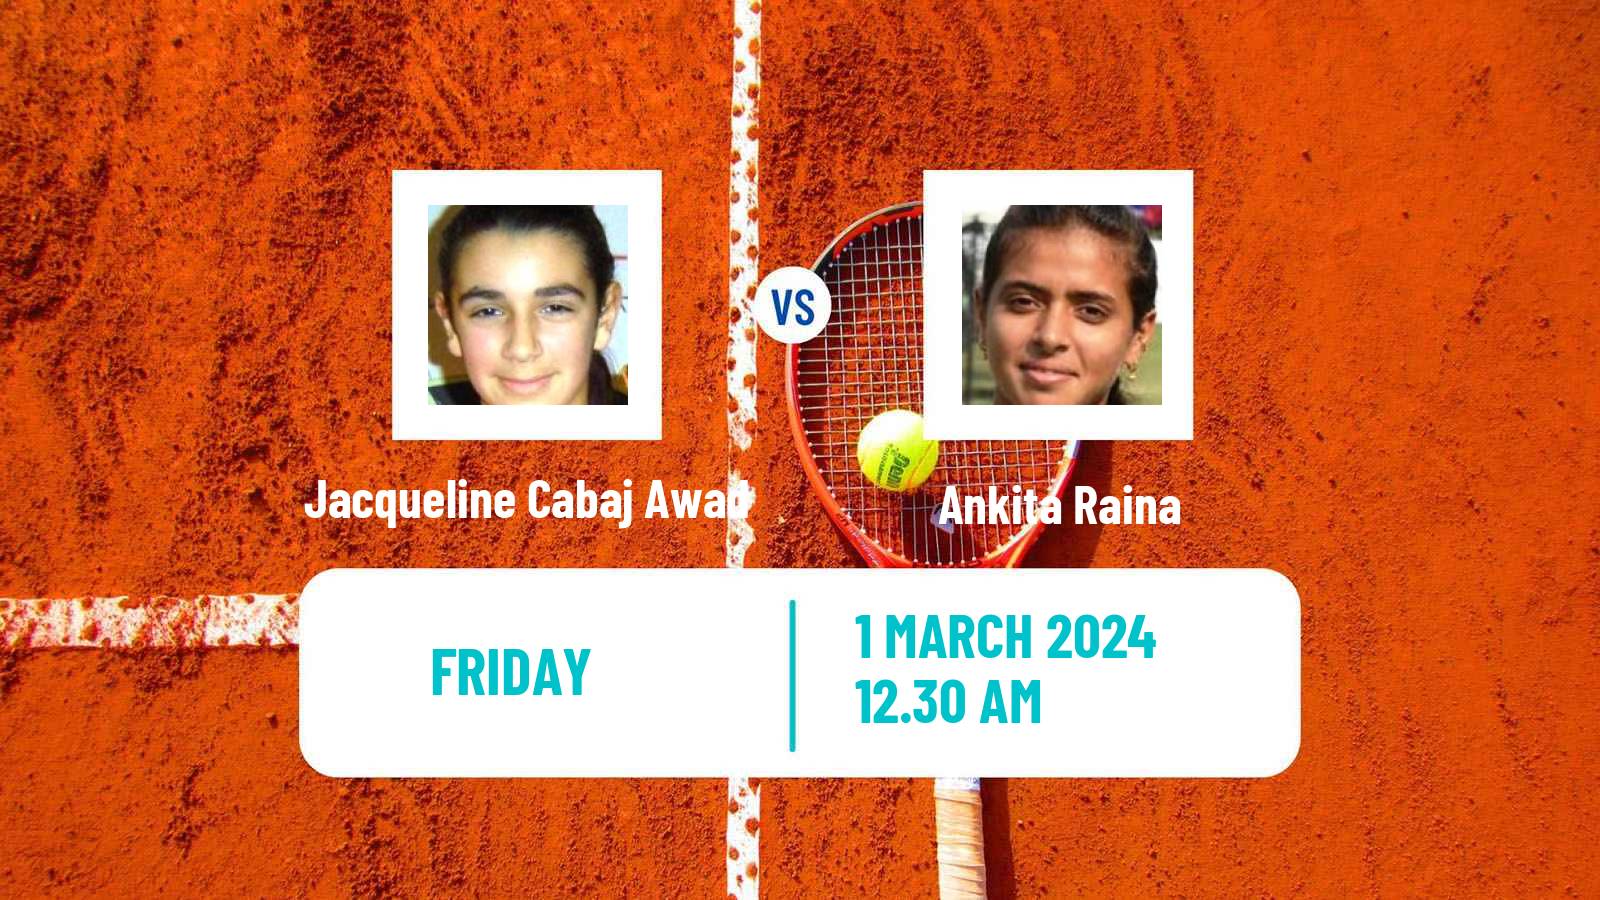 Tennis ITF W35 Gurugram Women Jacqueline Cabaj Awad - Ankita Raina